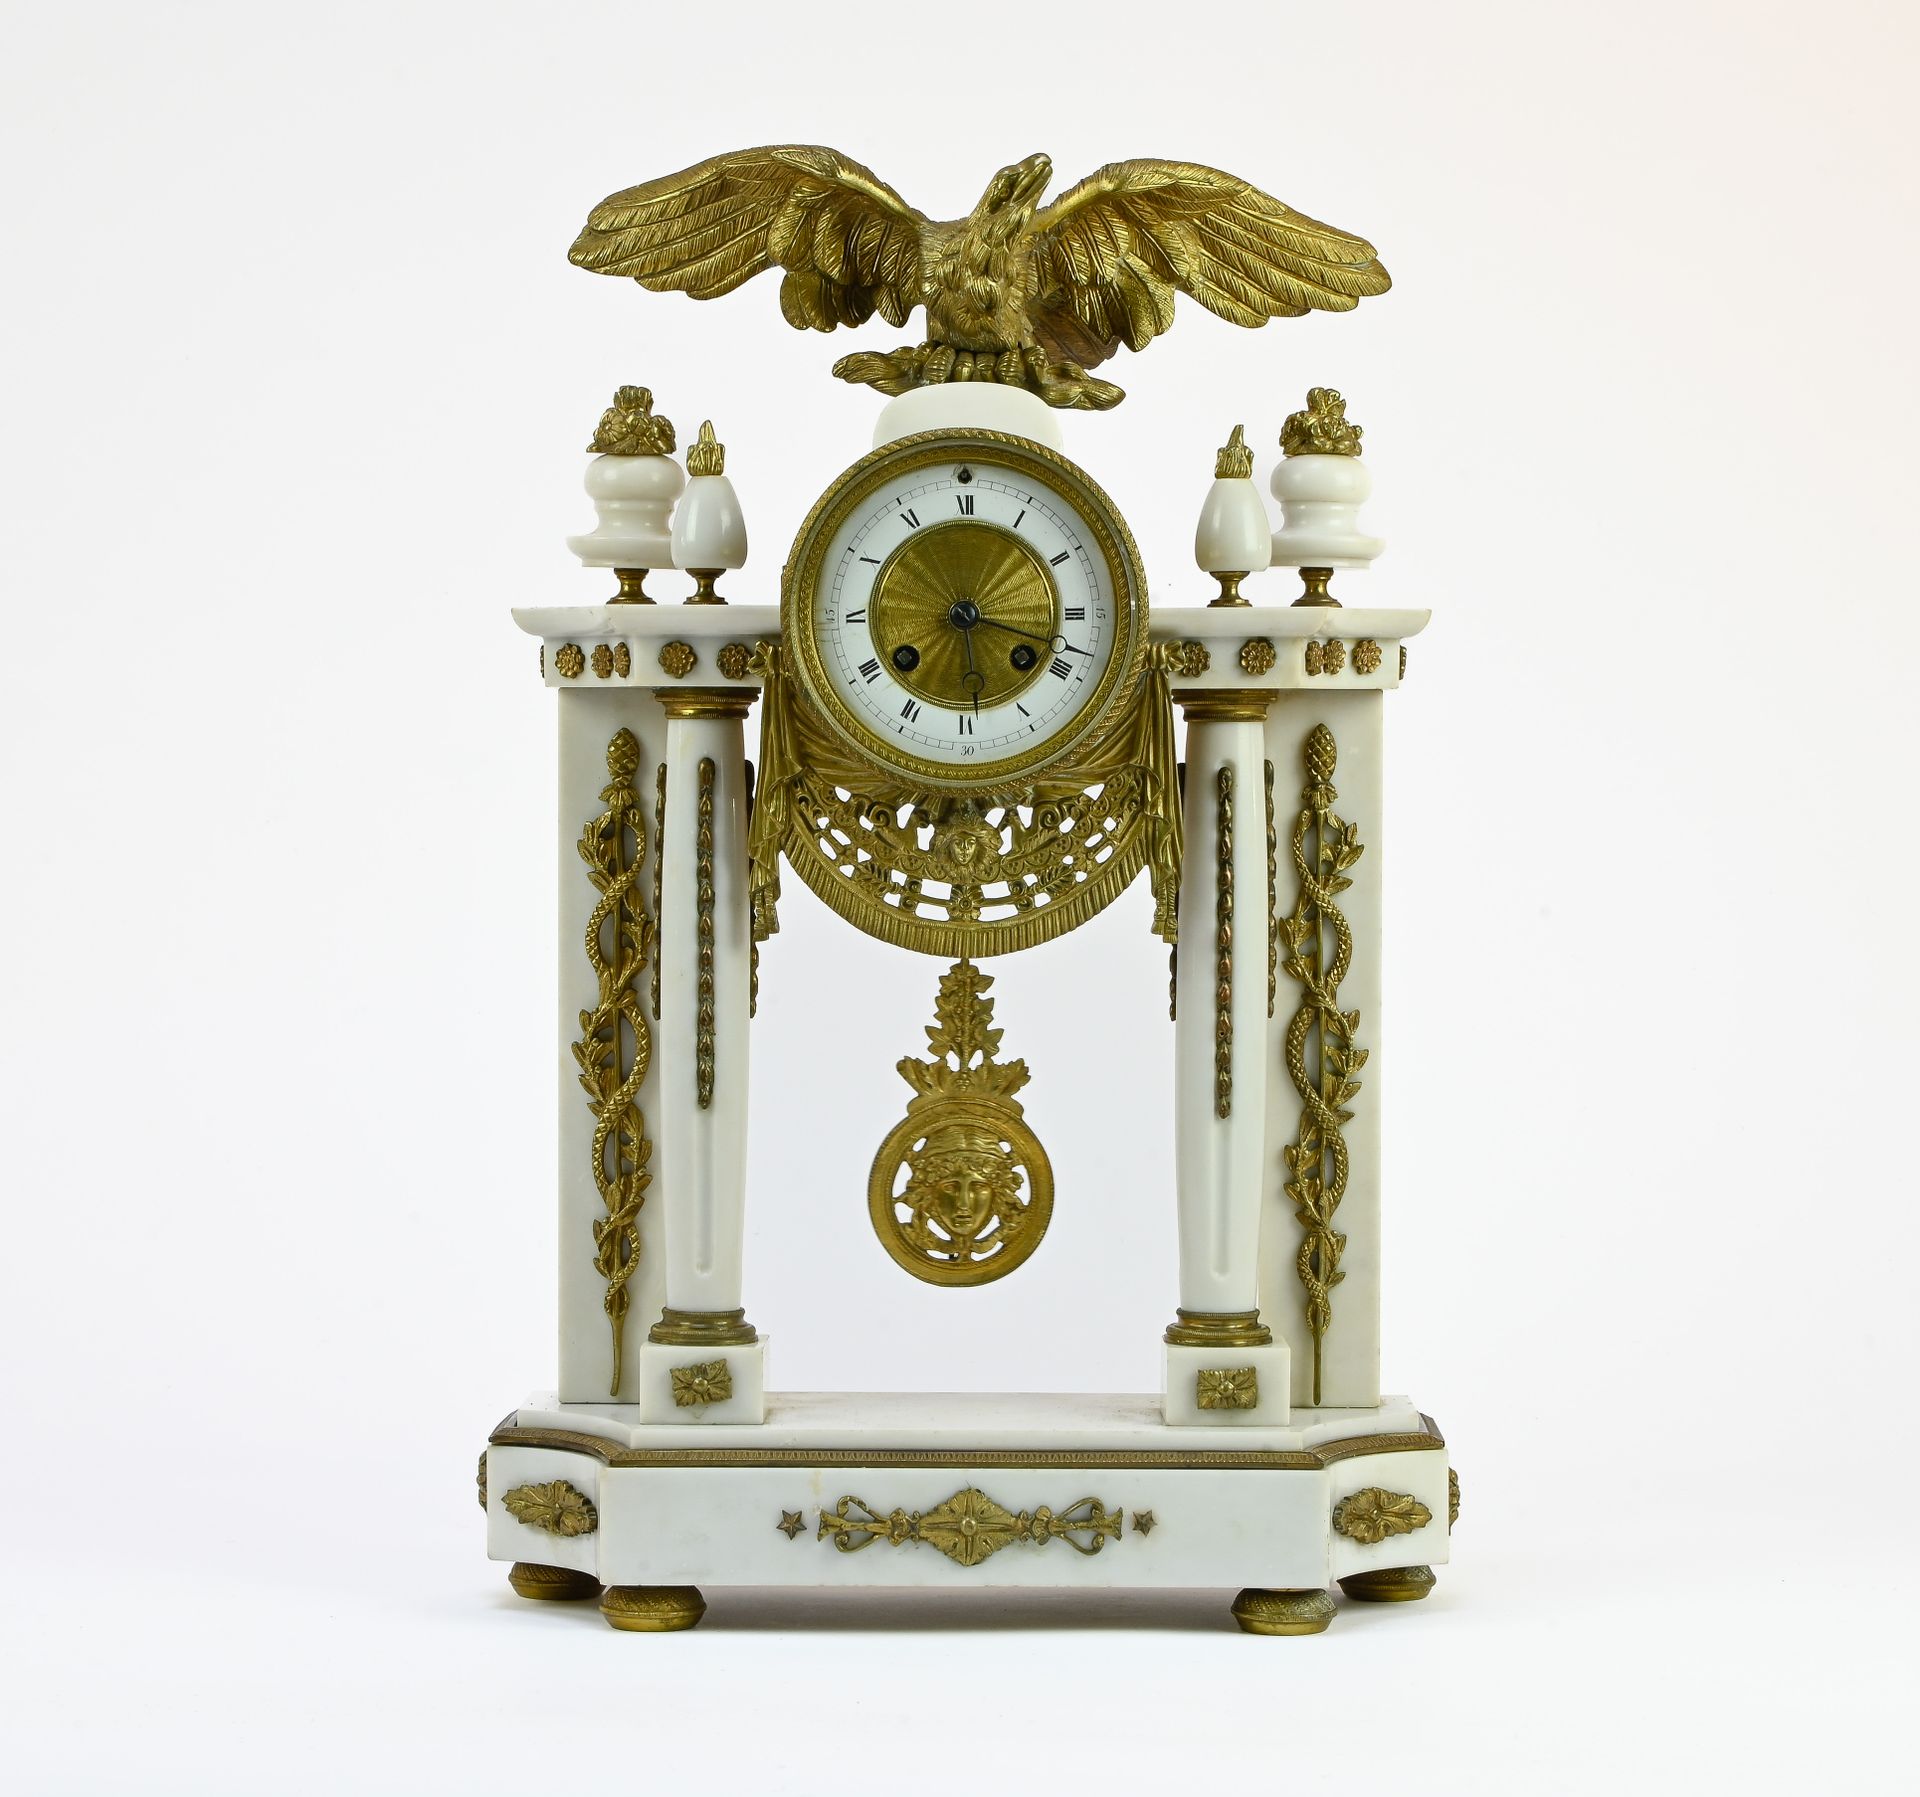 Pendule portique à l'aigle Portico clock with an eagle

LOUIS XVI ERA

White mar&hellip;